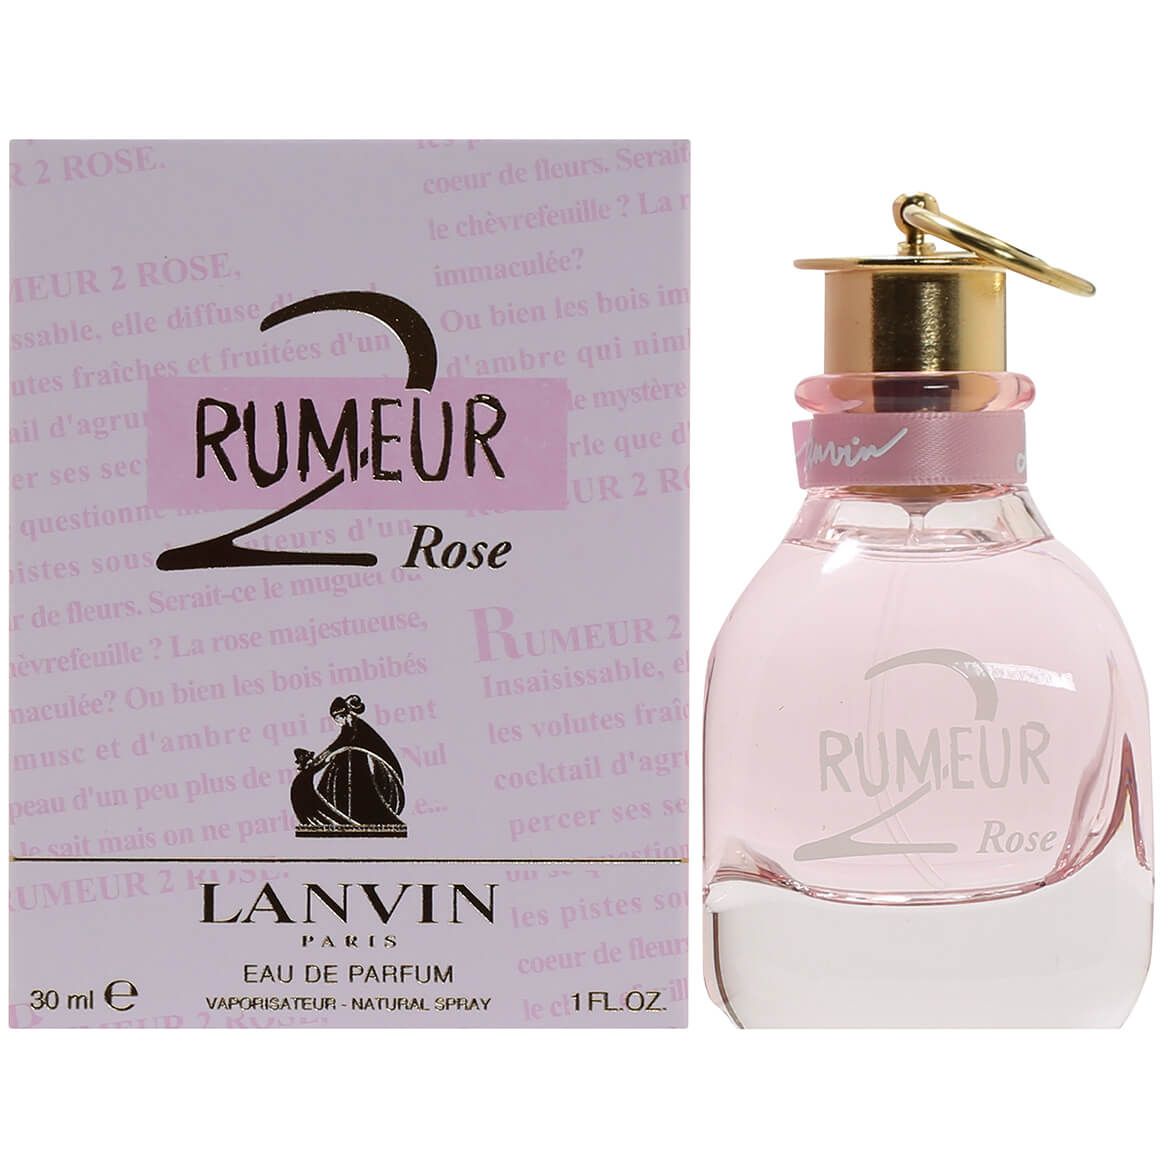 Rumeur 2 Rose by Lanvin for Women EDP, 1 fl. oz. + '-' + 377290